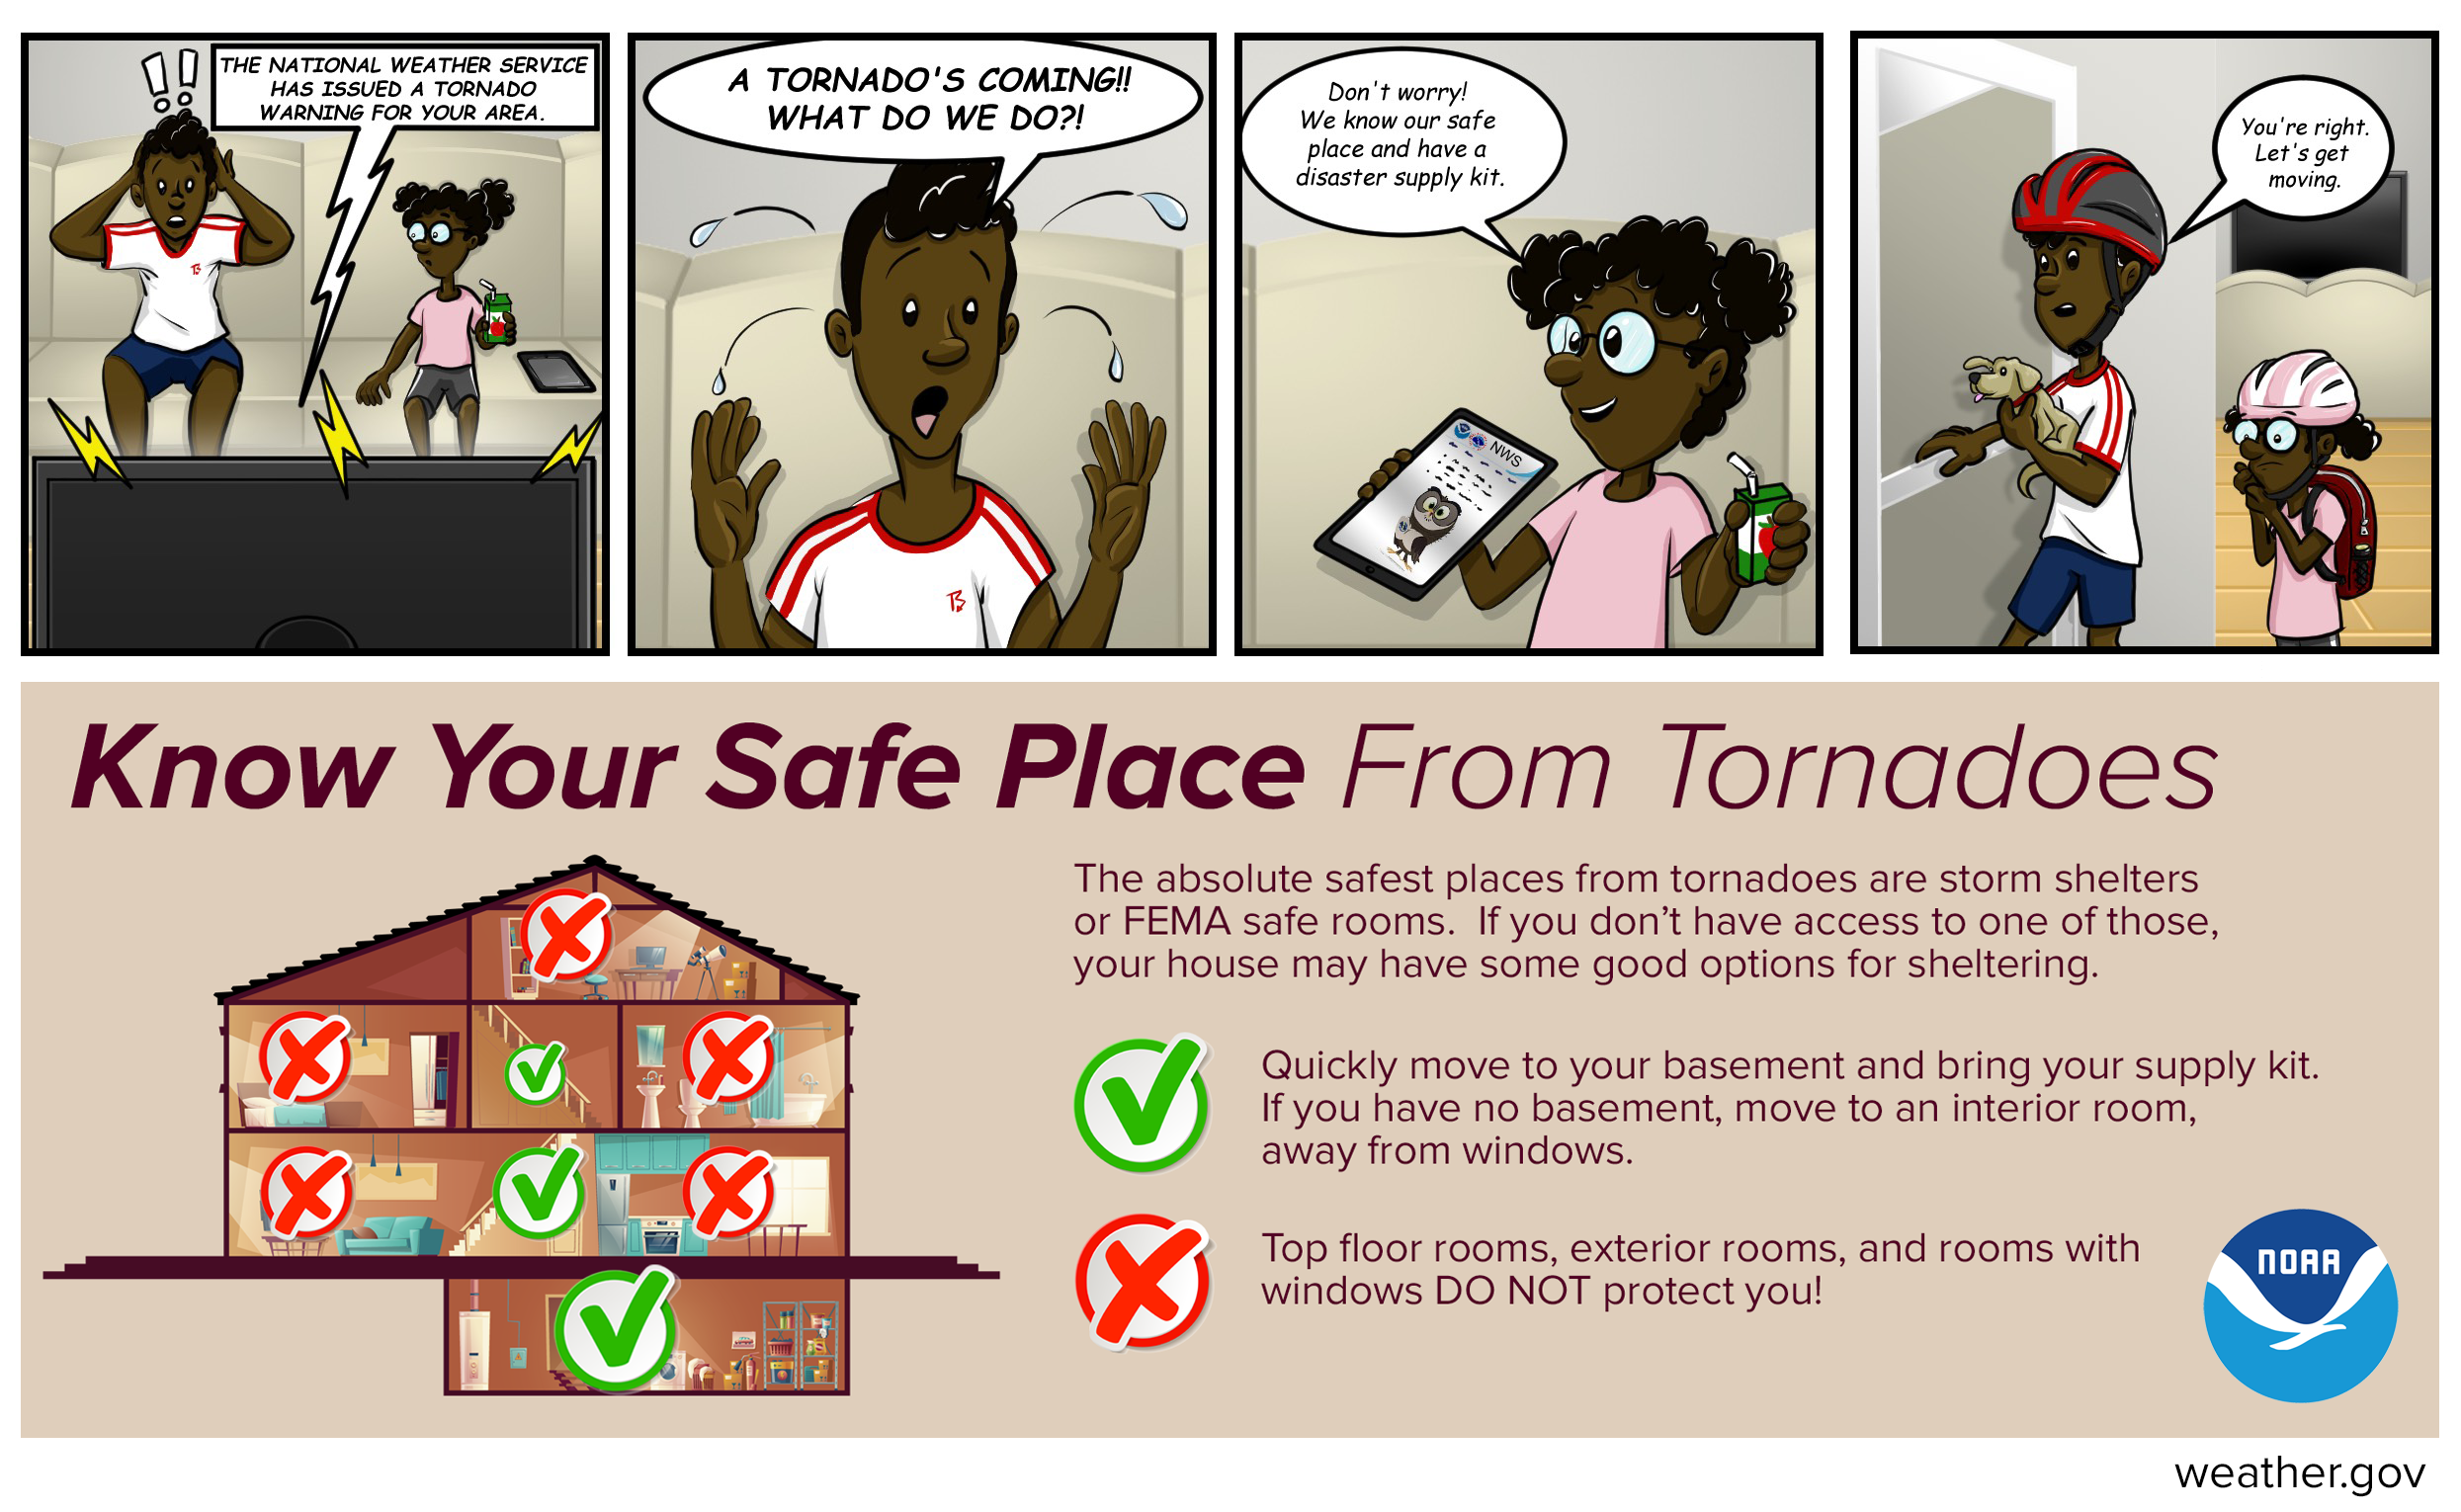 Image 1-Tornado Safe Place